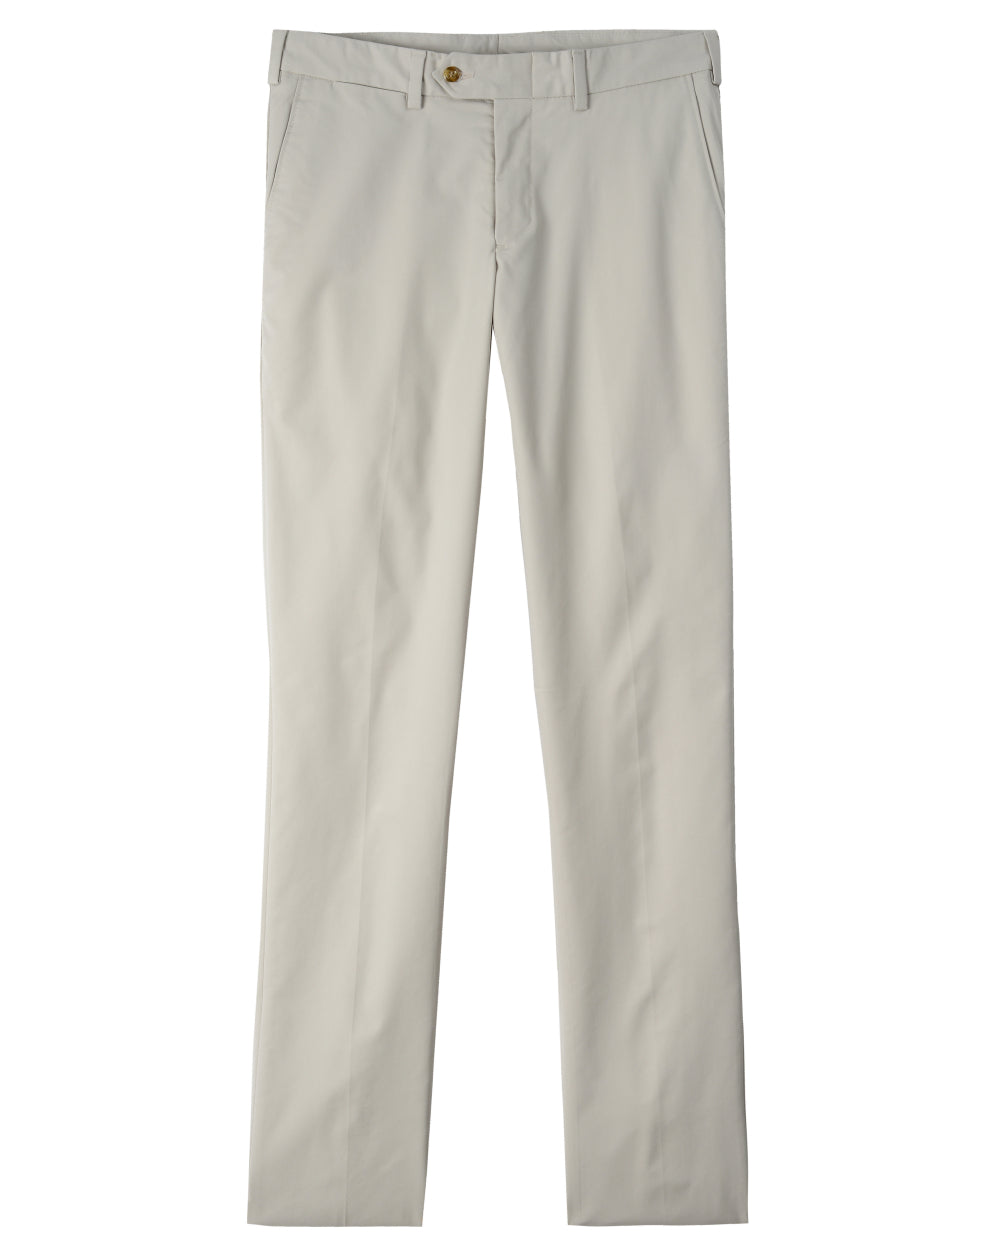 Original Twill Pant - Model M2 Standard Fit Plain Front in Khaki Size 40x30  by Bills Khakis - Hansen's Clothing